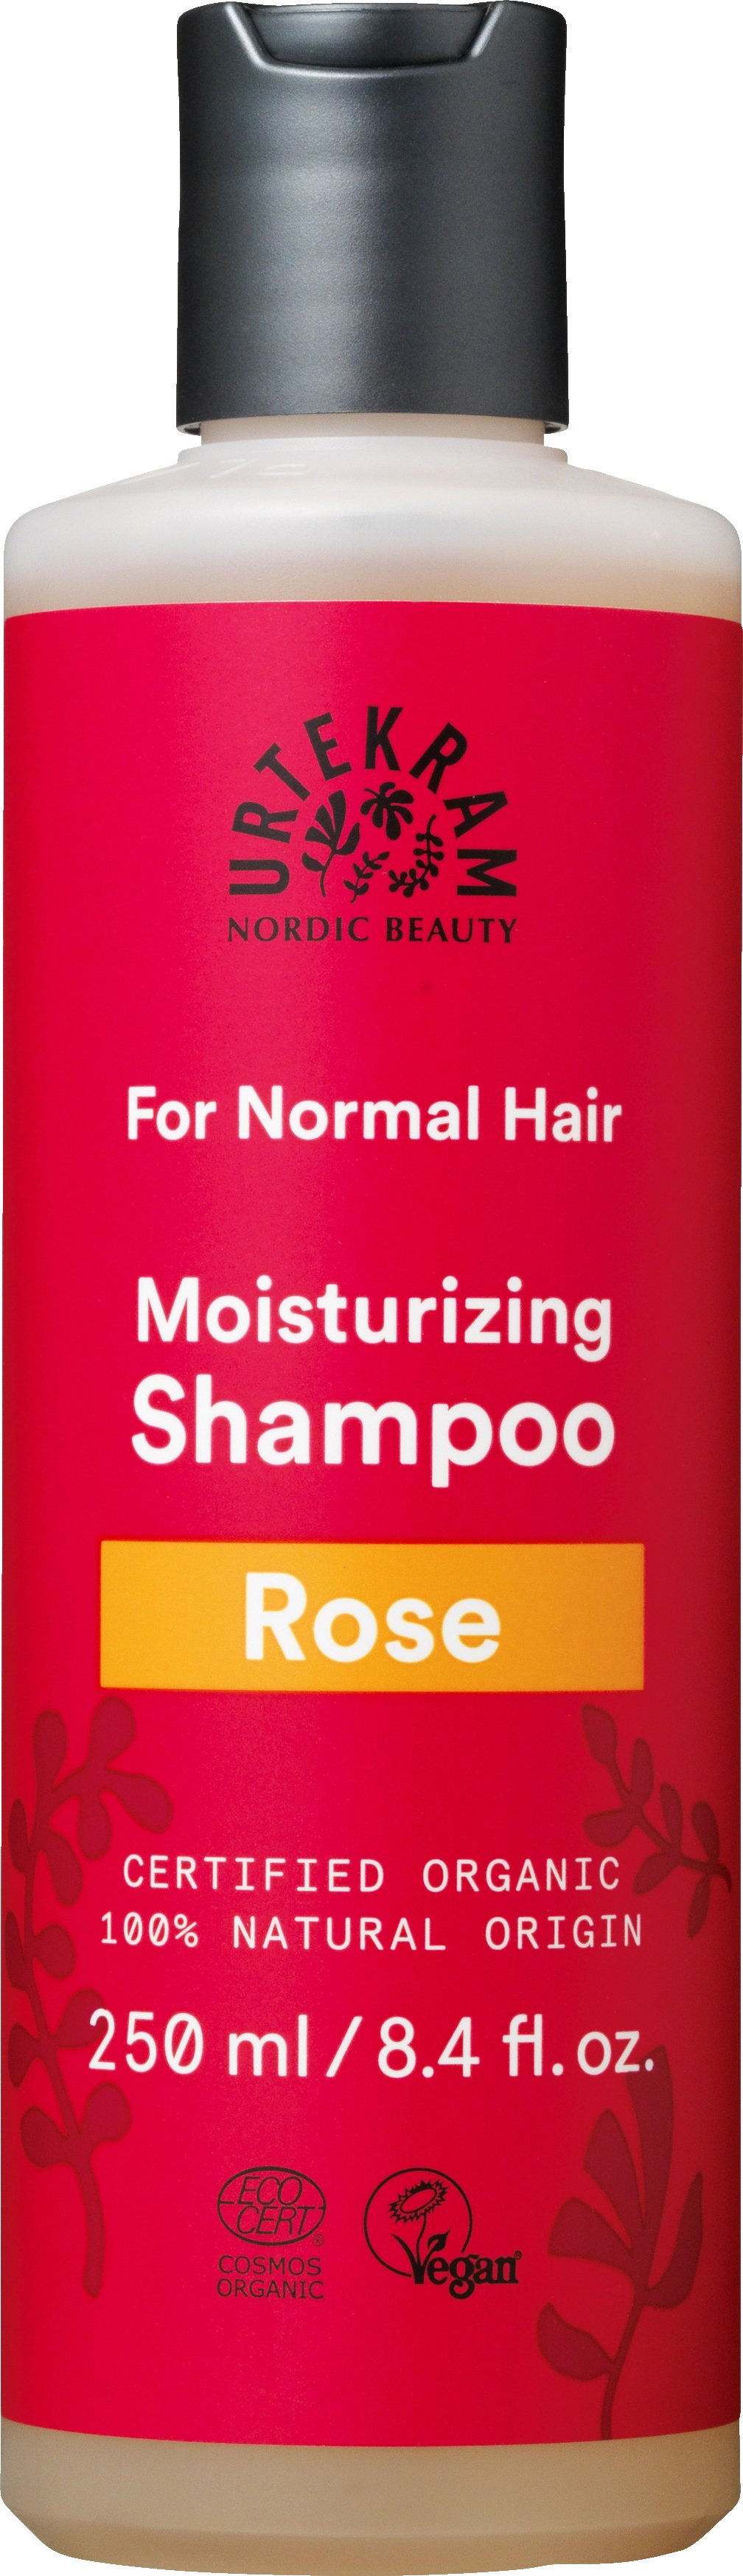 Rose Normal Hair 250 ml. - PERSONLIG - MED MERE .DK